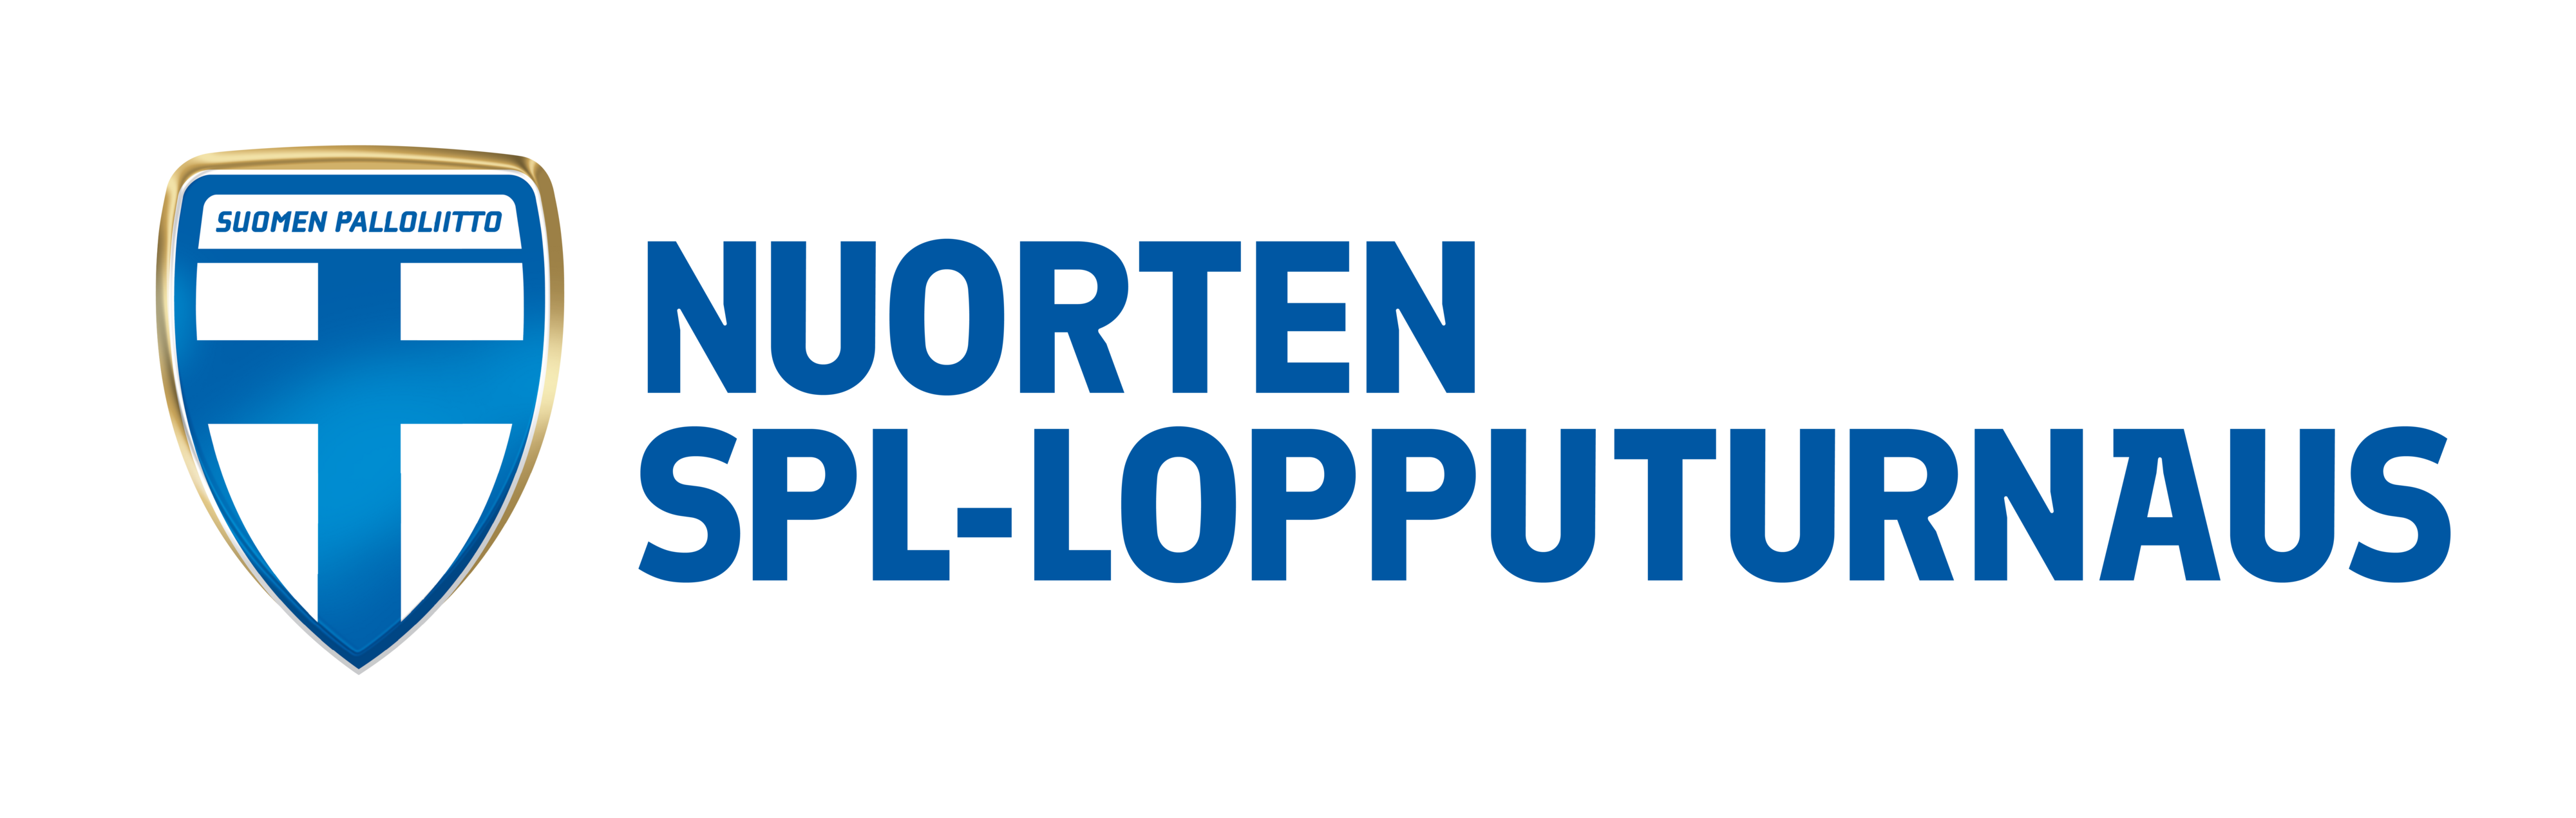 SPL Lopputurnaus 3d logo1